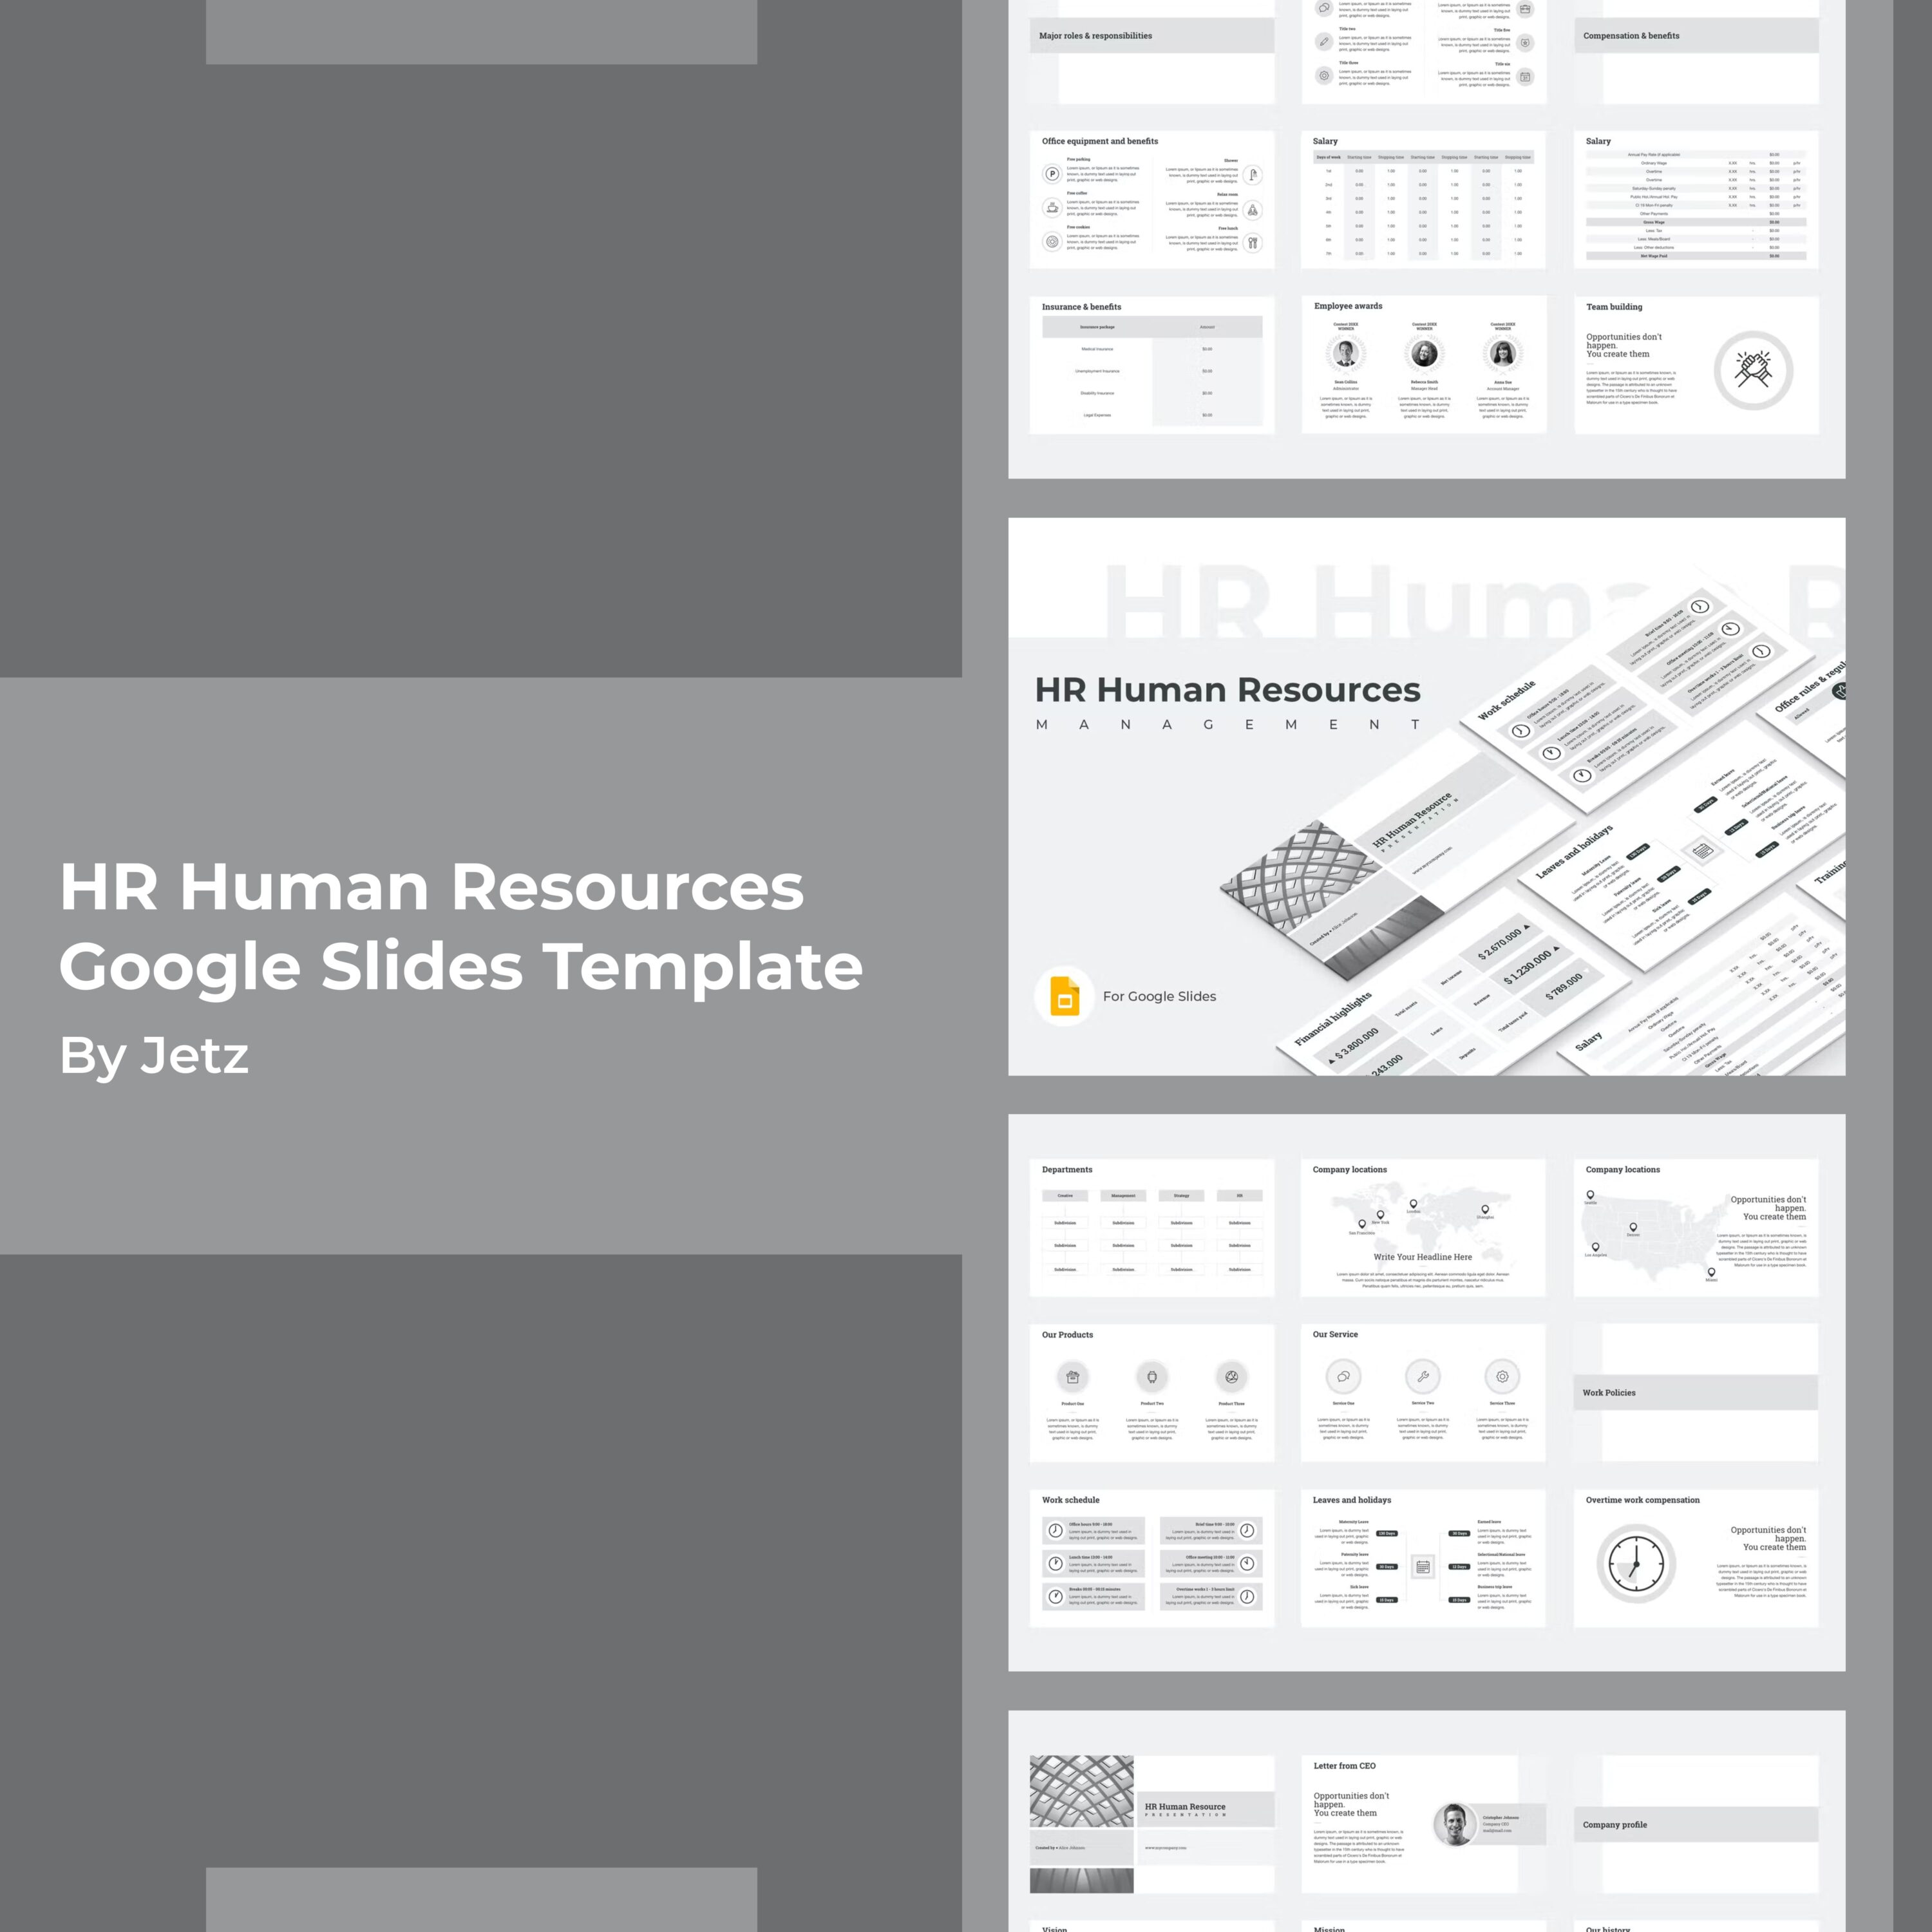 HR Human Resources Google Slides Template.